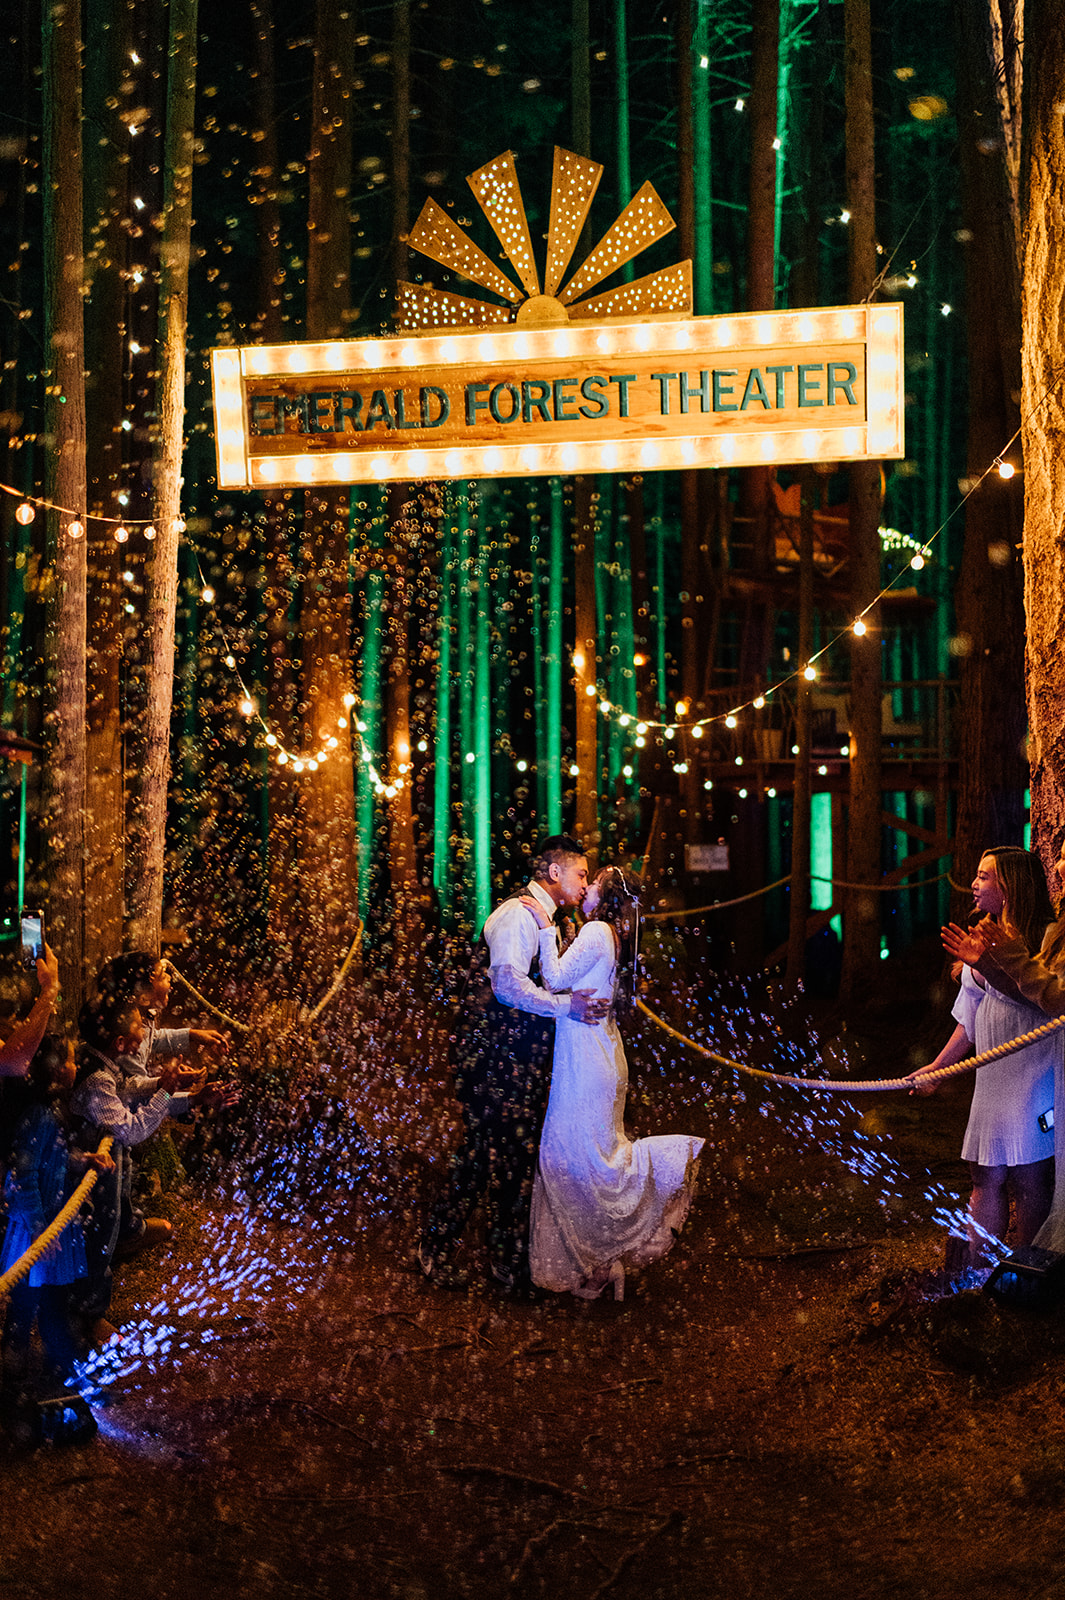 Emerald Forest Theater Wedding